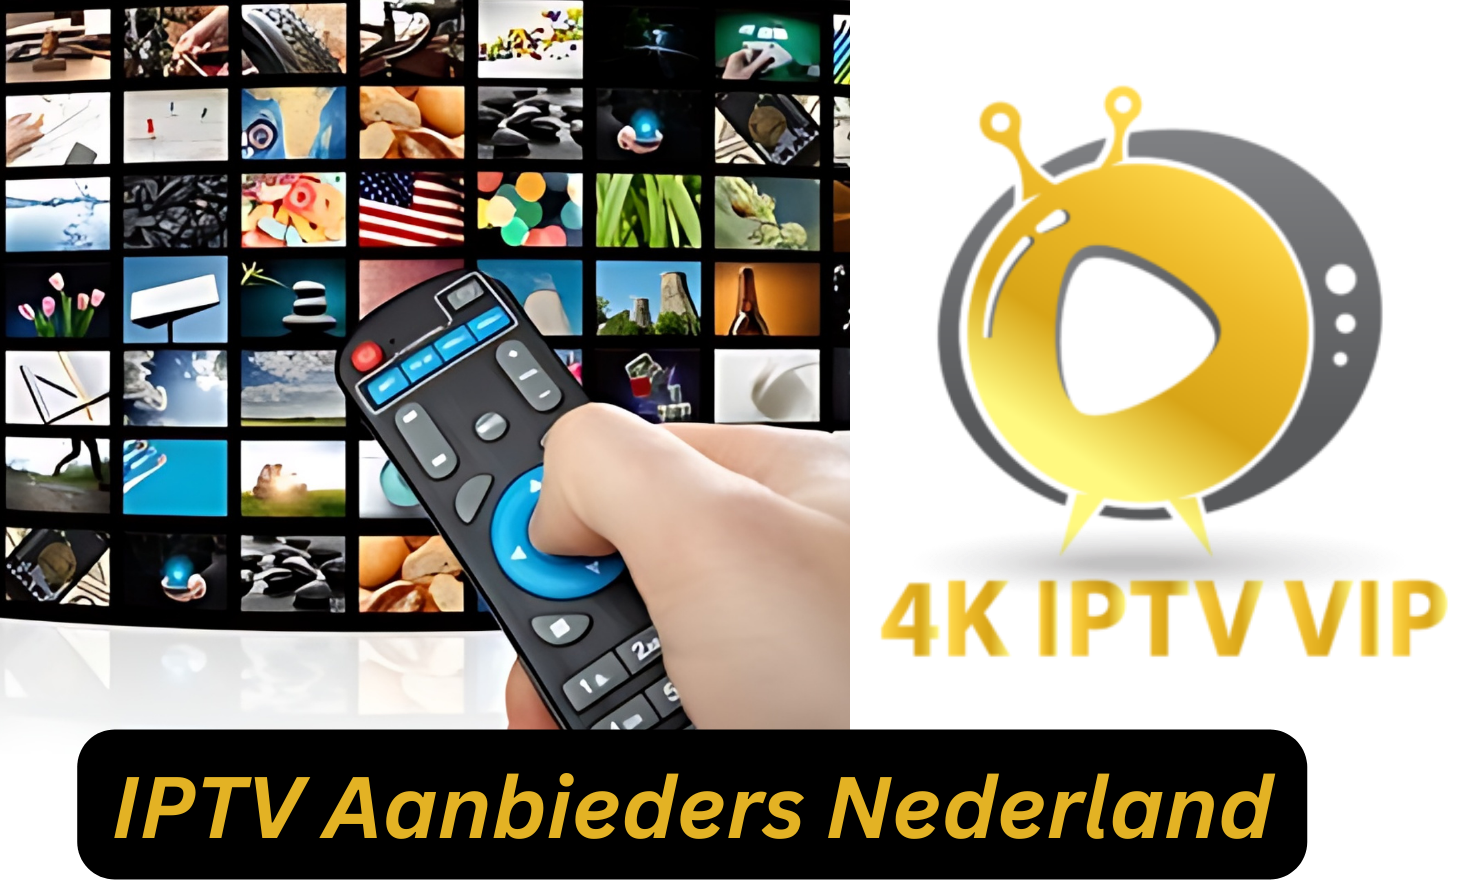 IPTV Aanbieders Nederland - 4k-iptv